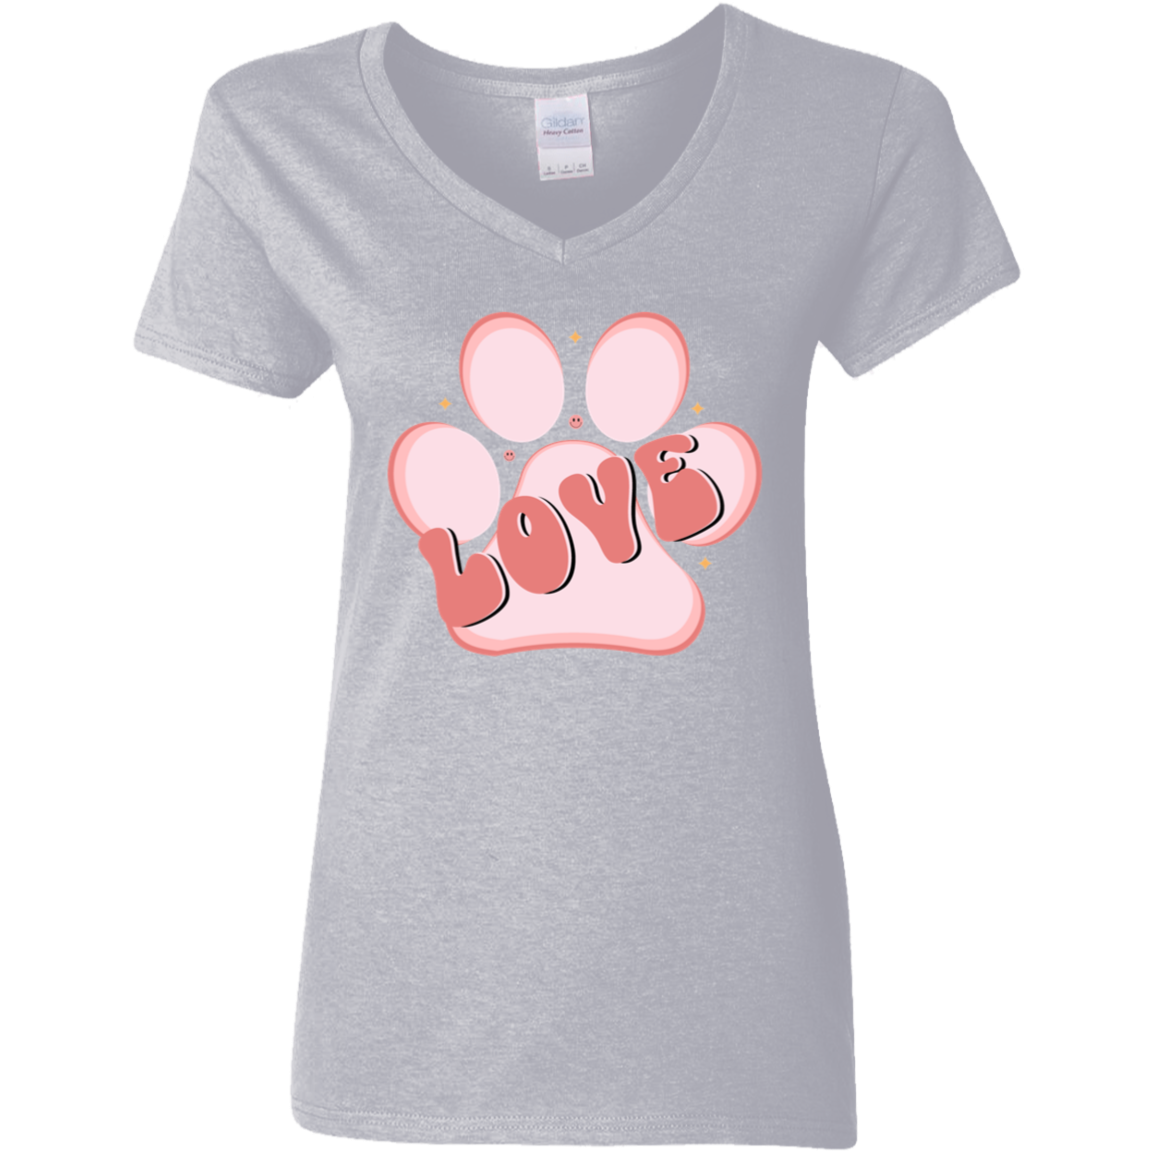 Love Paw Print Dog Rescue Ladies' V-Neck T-Shirt